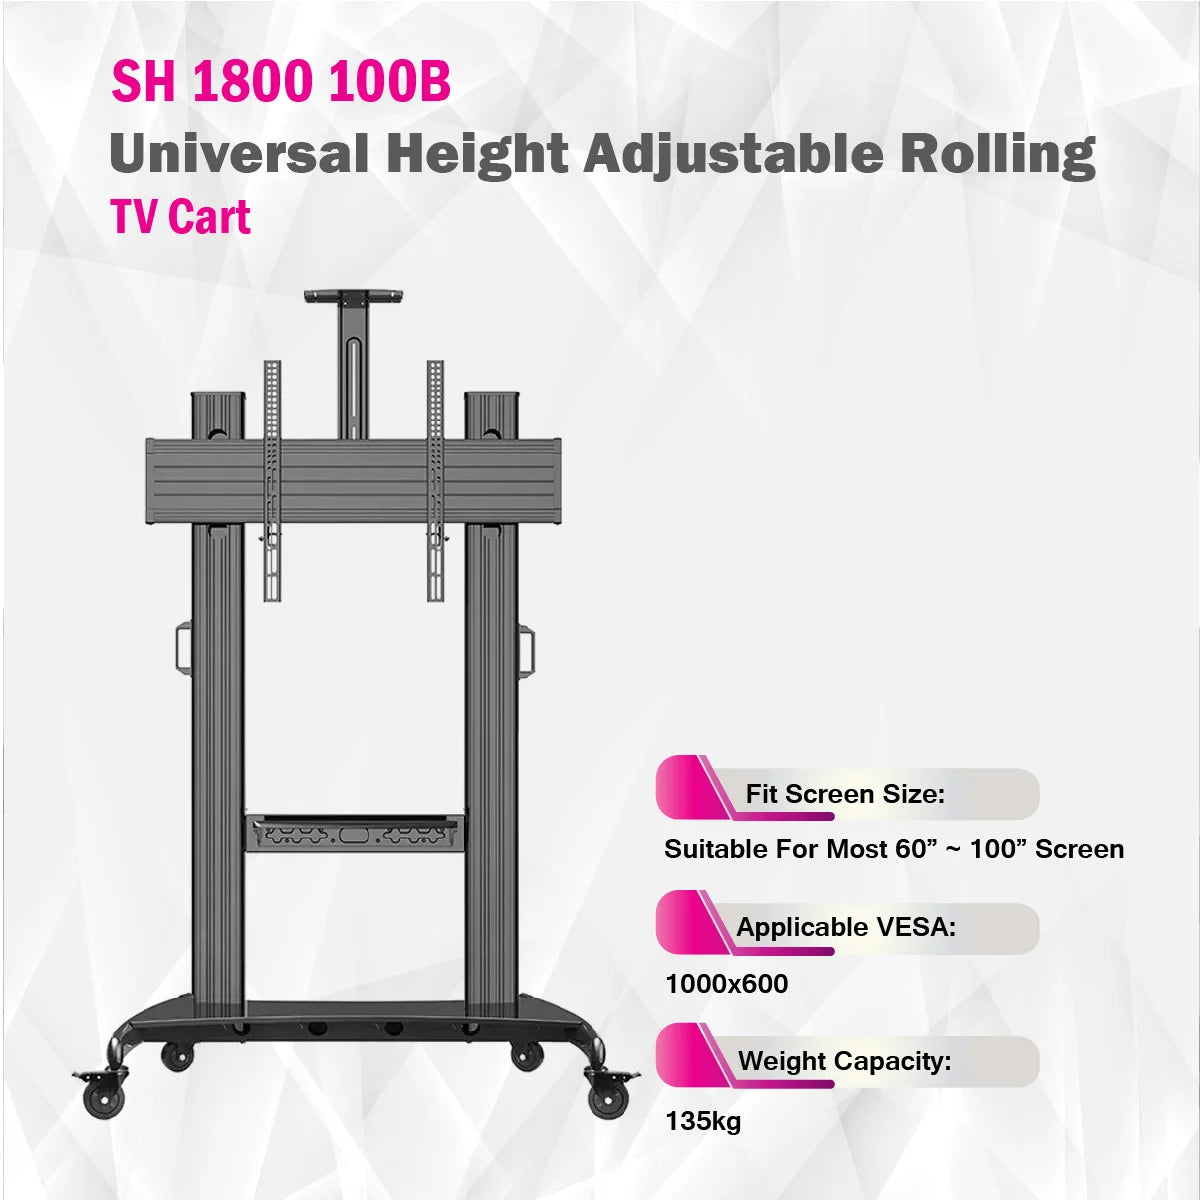 Skilltech -SH 1800 100B- Universal Height Adjustable Rolling Tv Stand